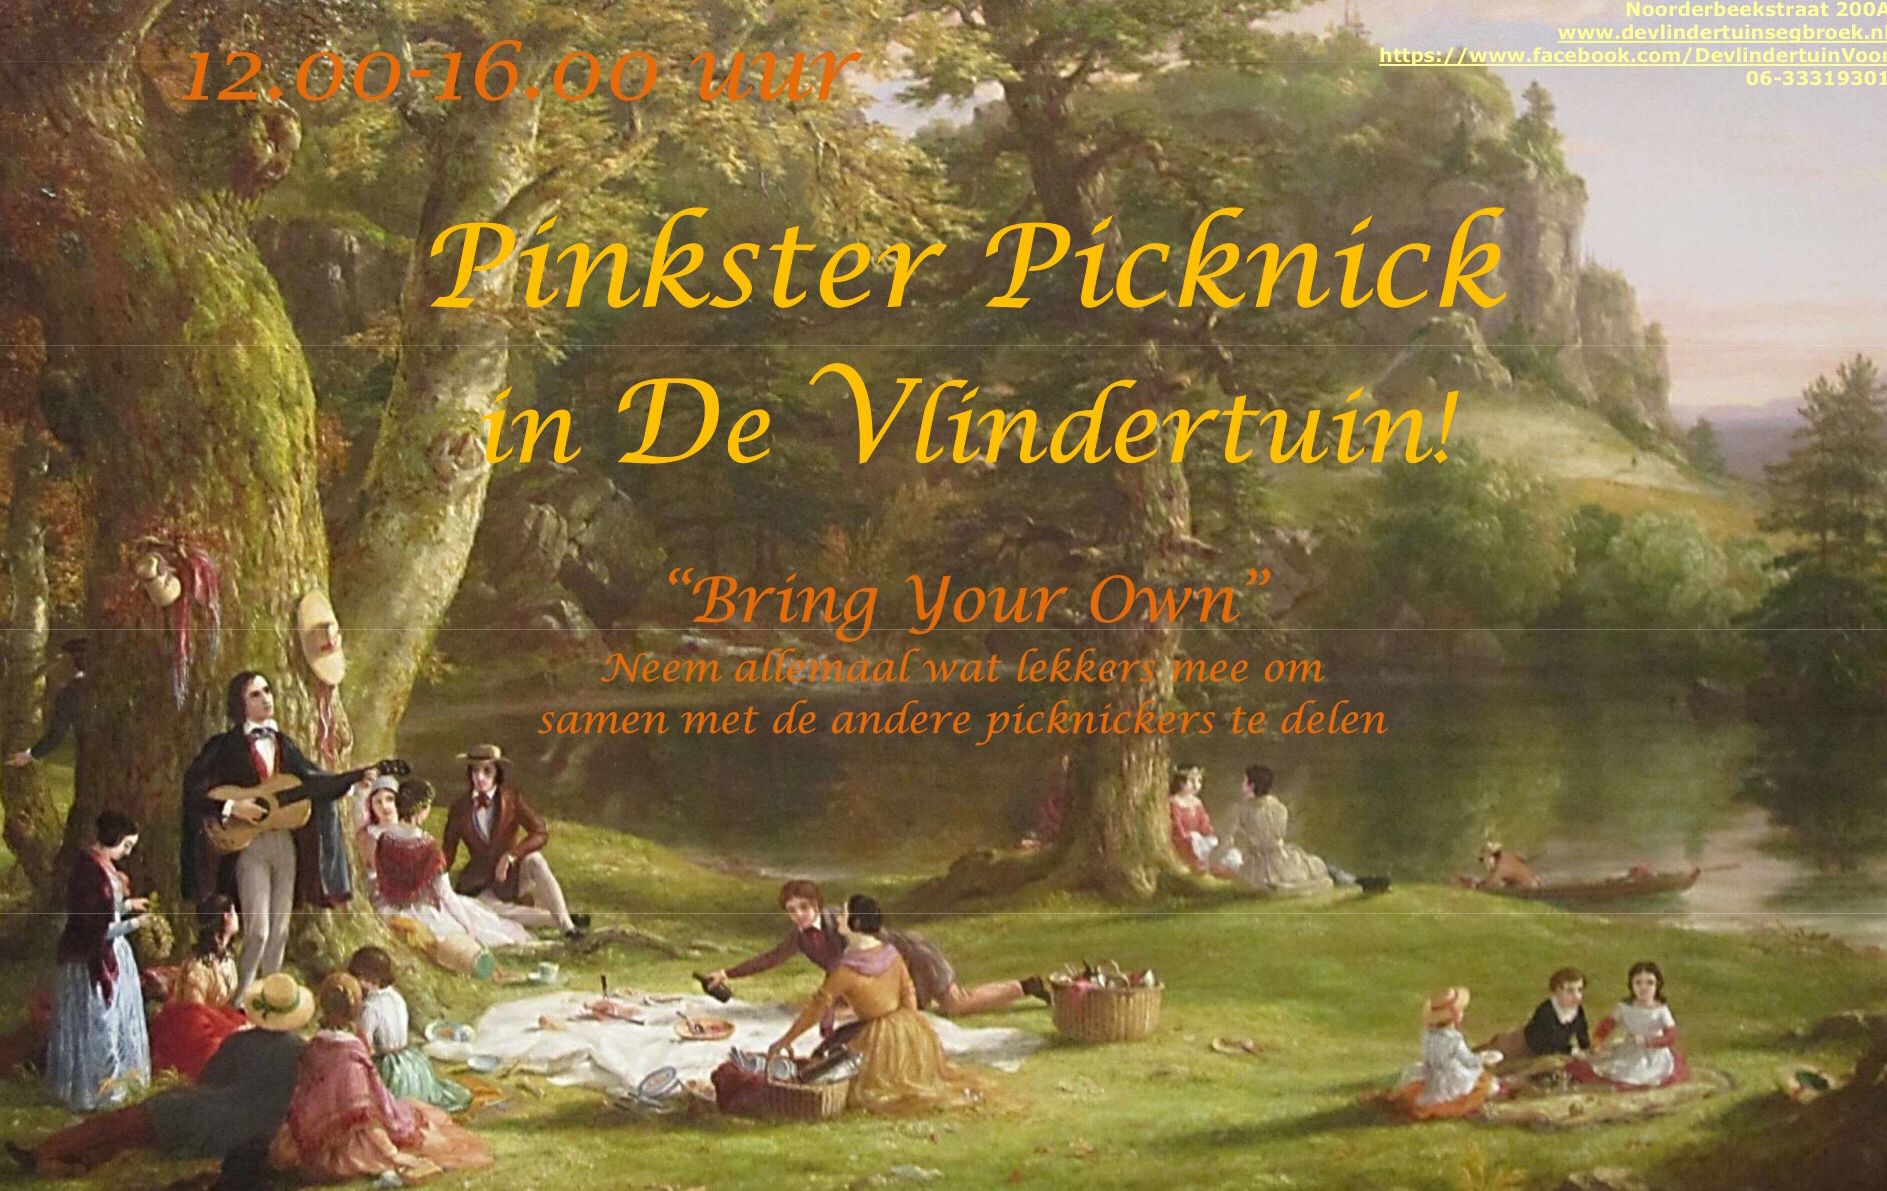 Pinkster Picknick in de Vlindertuin